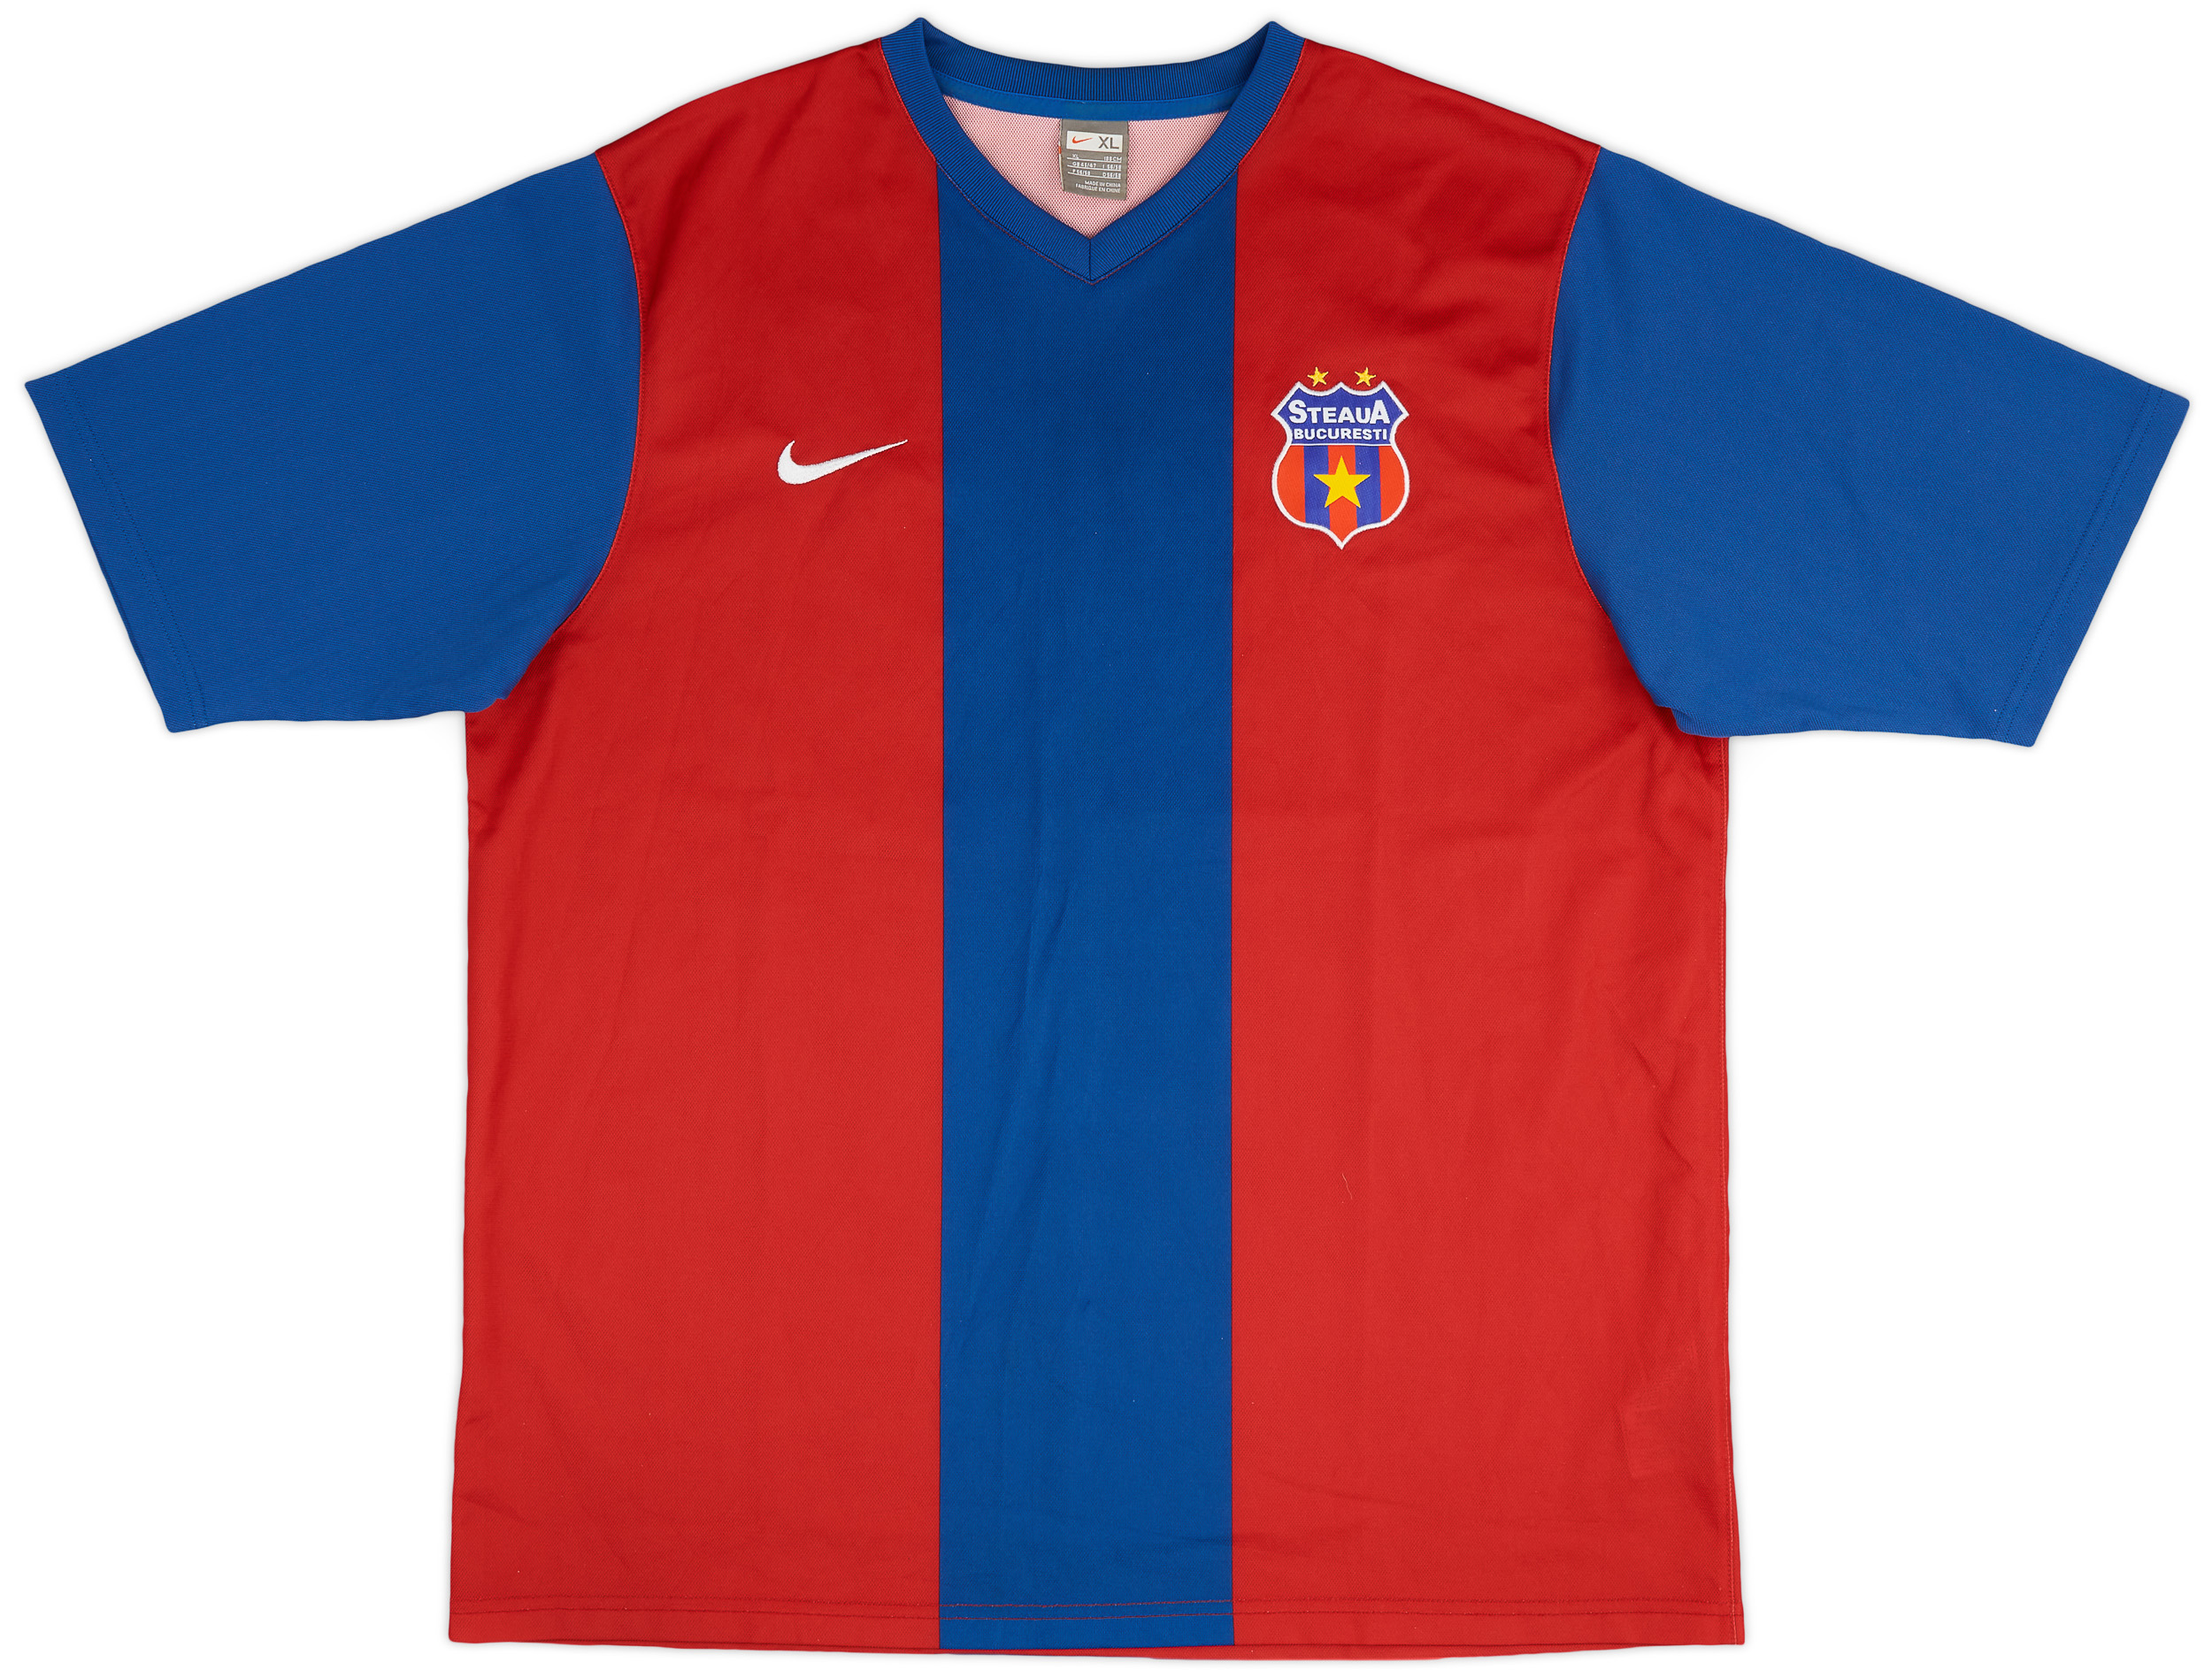 CSA Steaua București  home shirt  (Original)